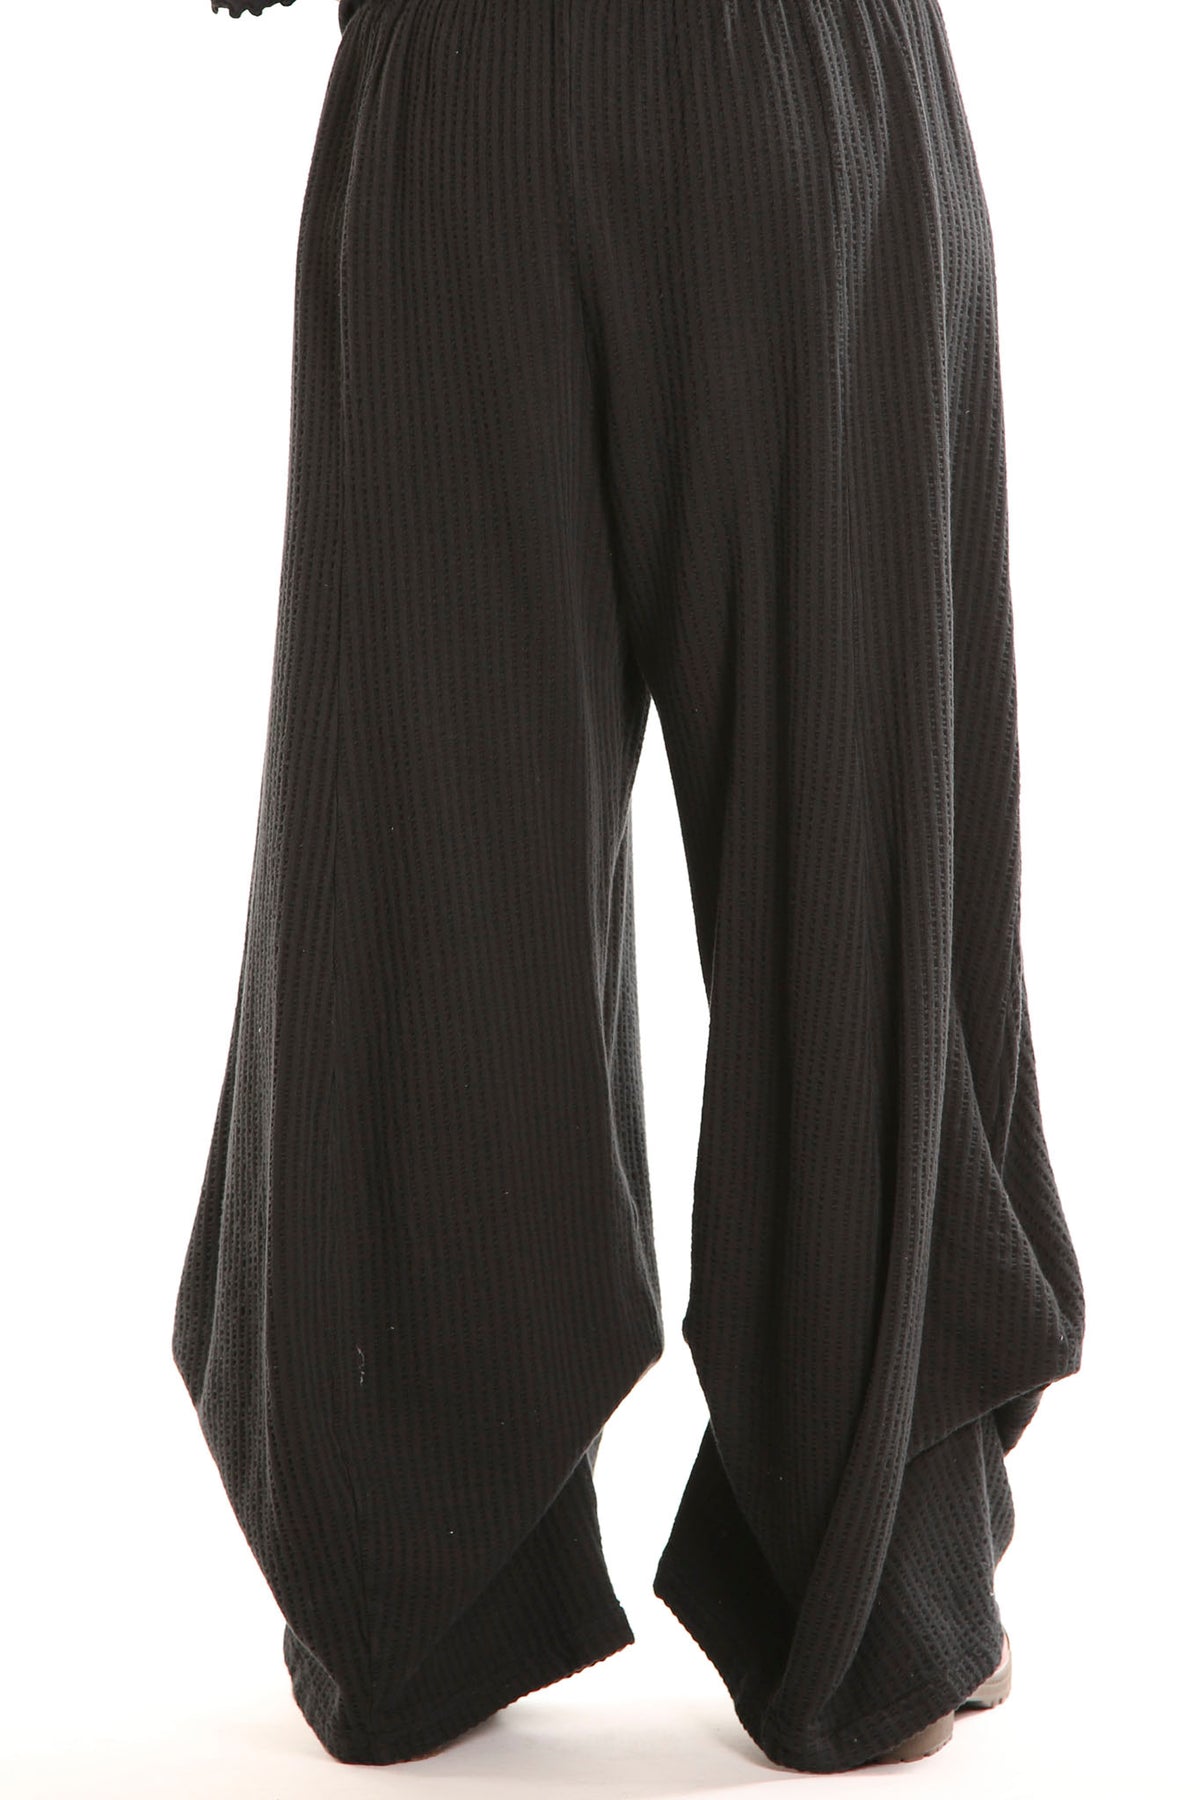 3267 Textured Knit Billow Pants Black UnPrinted